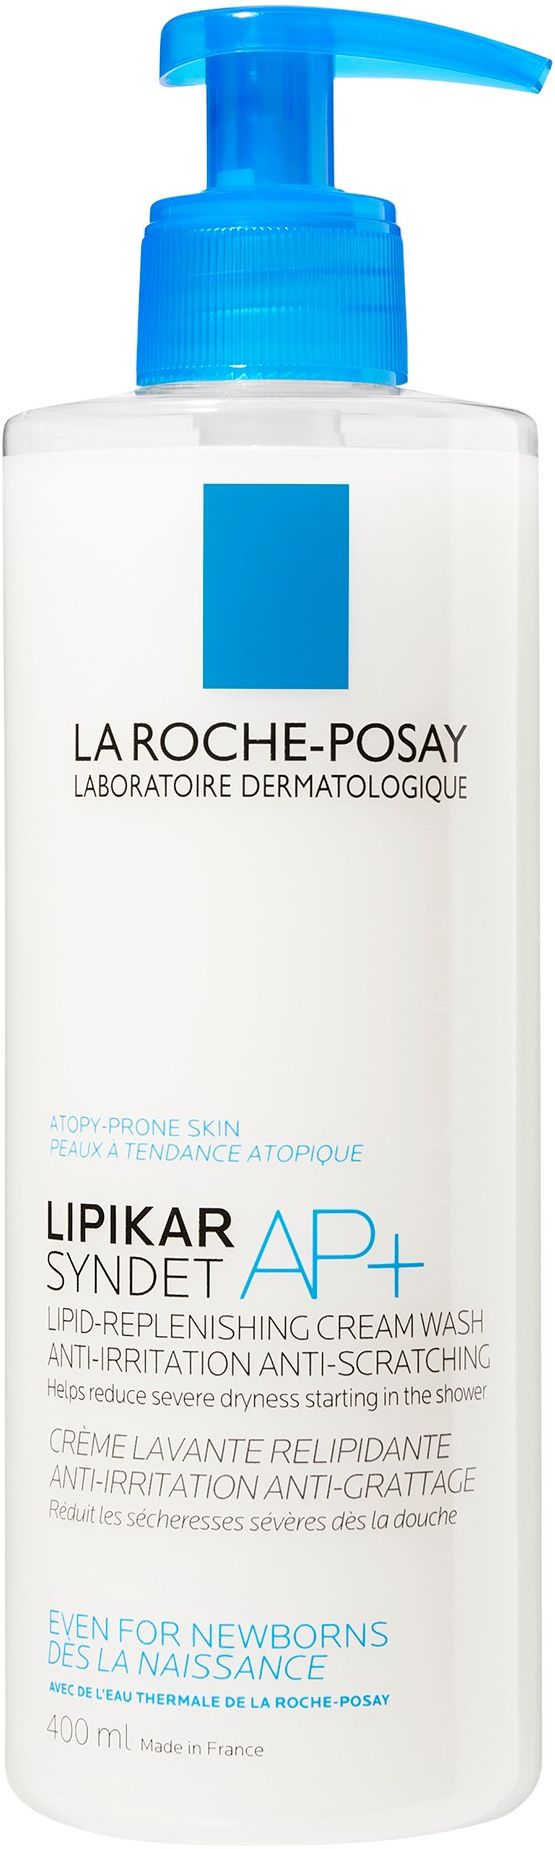 La Roche-Posay Lipikar syndet AP+ 400 ml